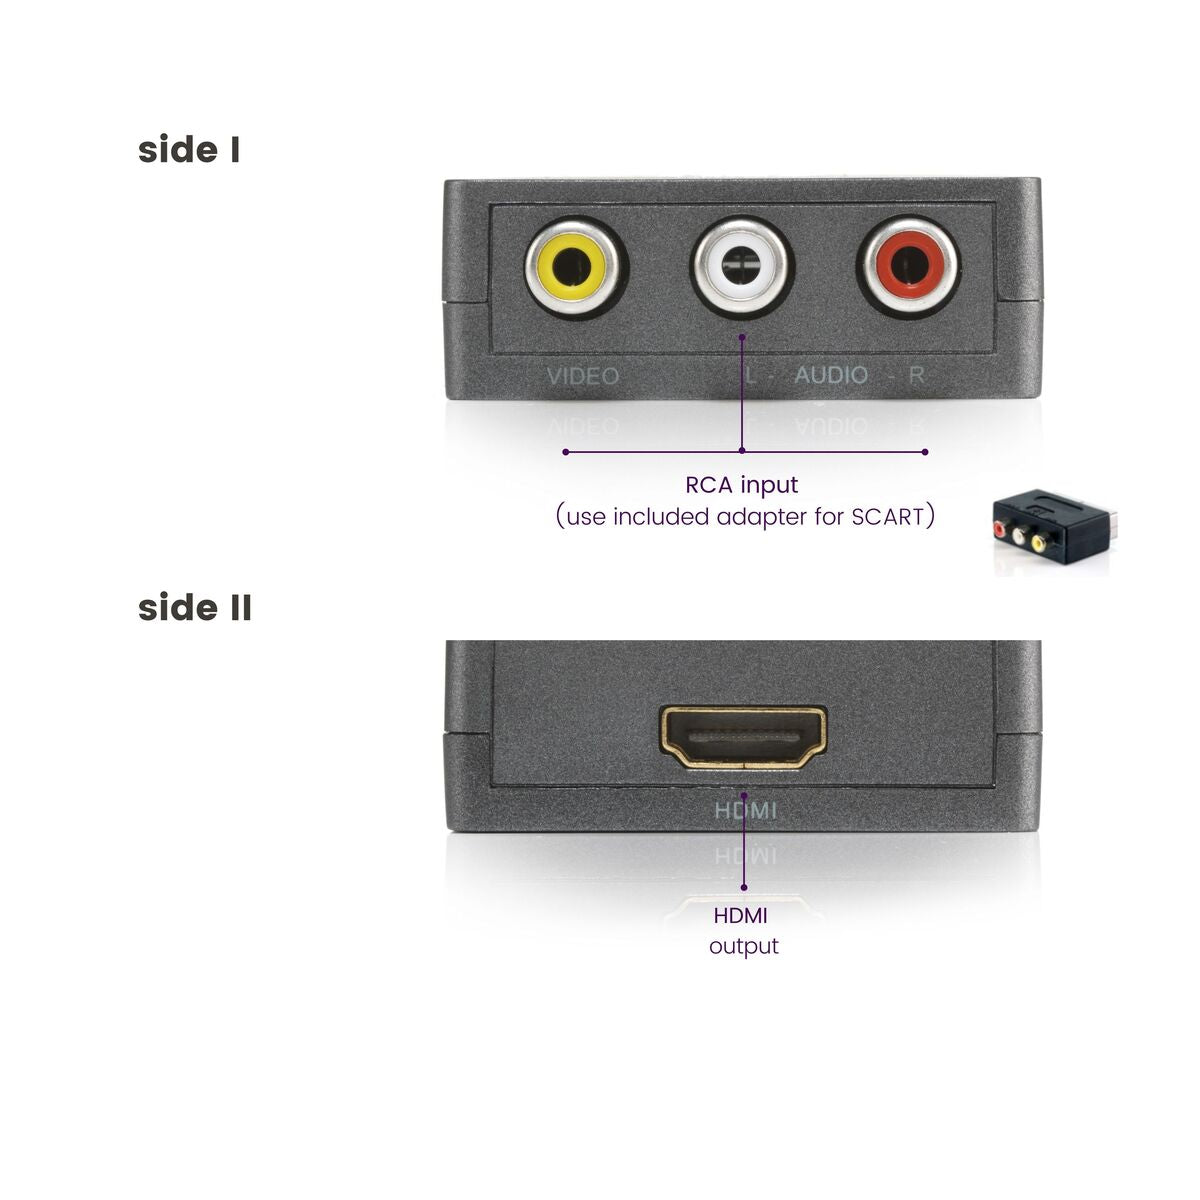 Convertisseur INF HDMI vers péritel